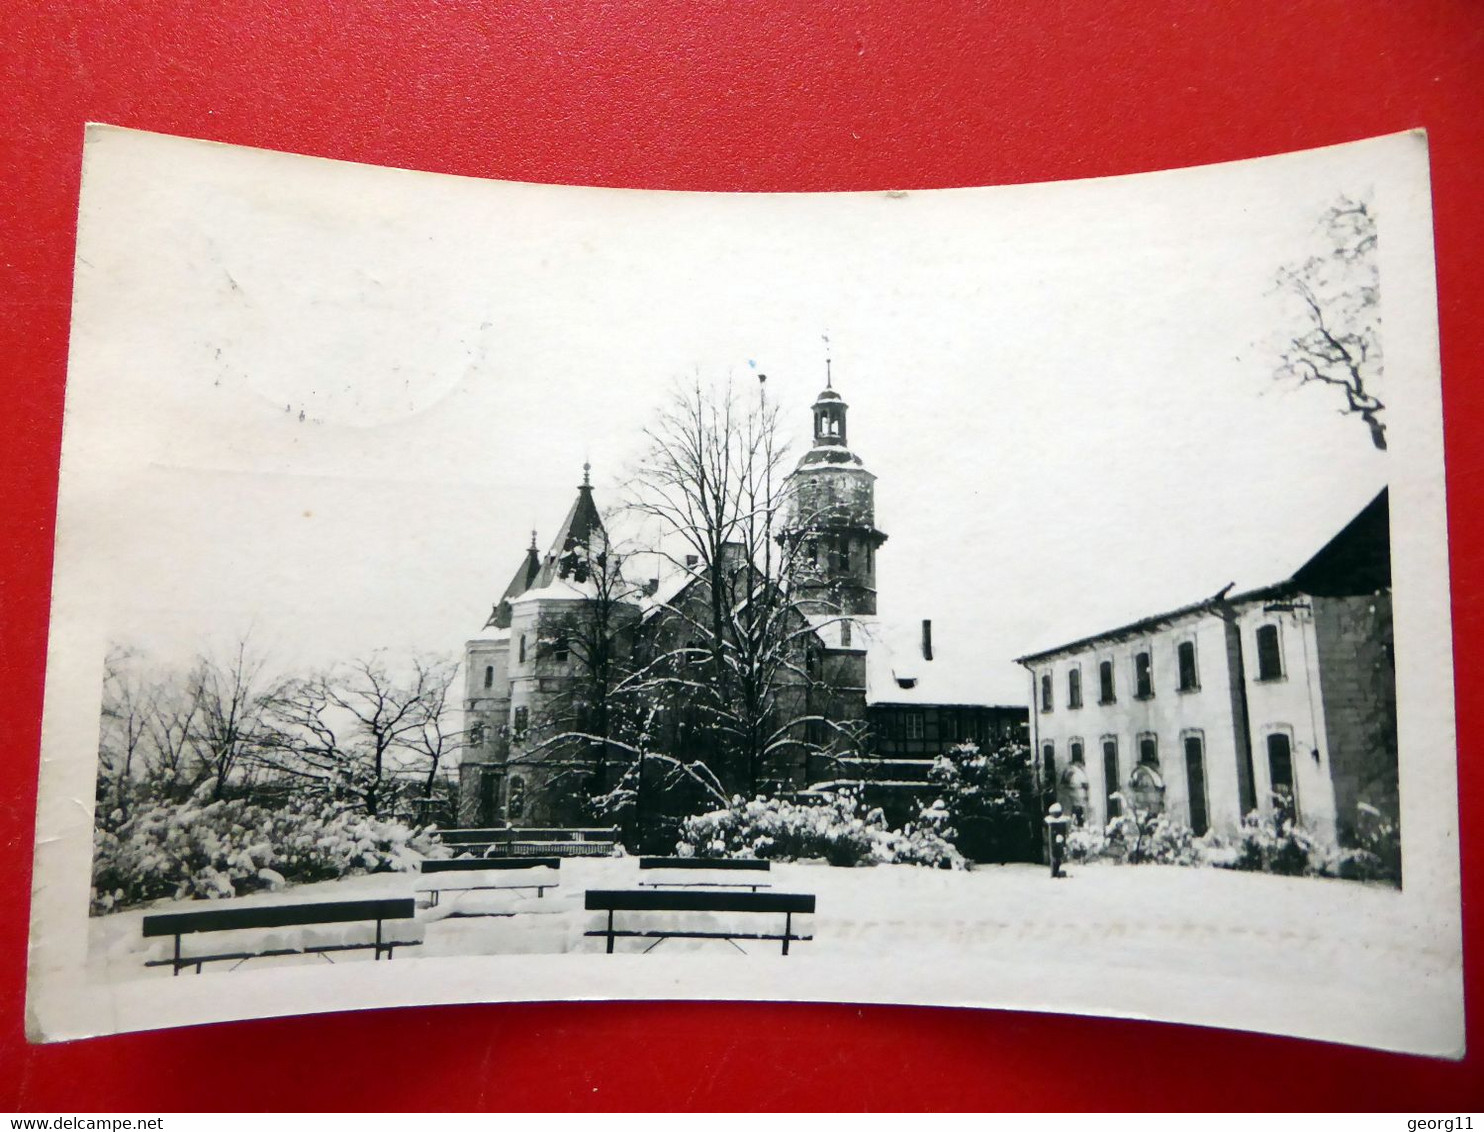 Schleusingen - Schloss Bertholdsburg - Winter - Kleinformat - Echt Foto - DDR 1962 - Thüringen - Schleusingen